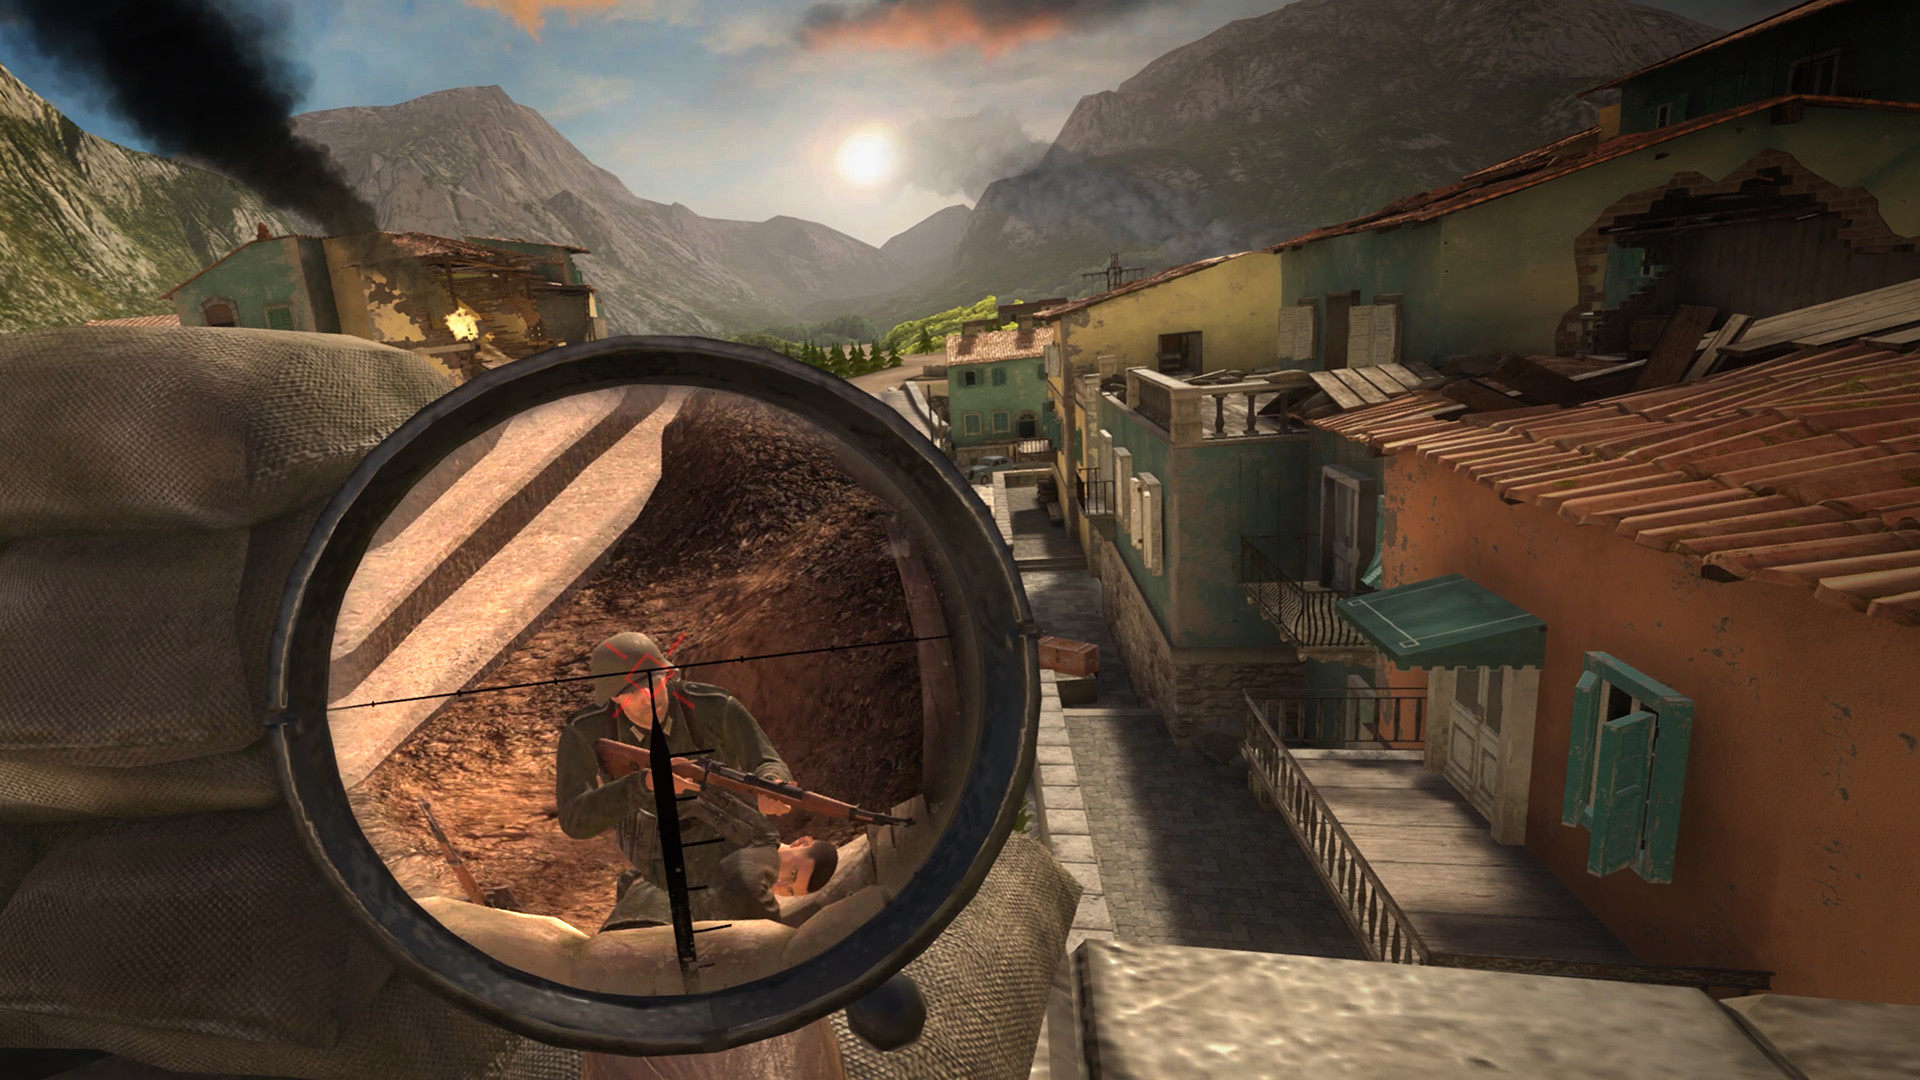 Sniper Elite VR PlayStation 4 Account